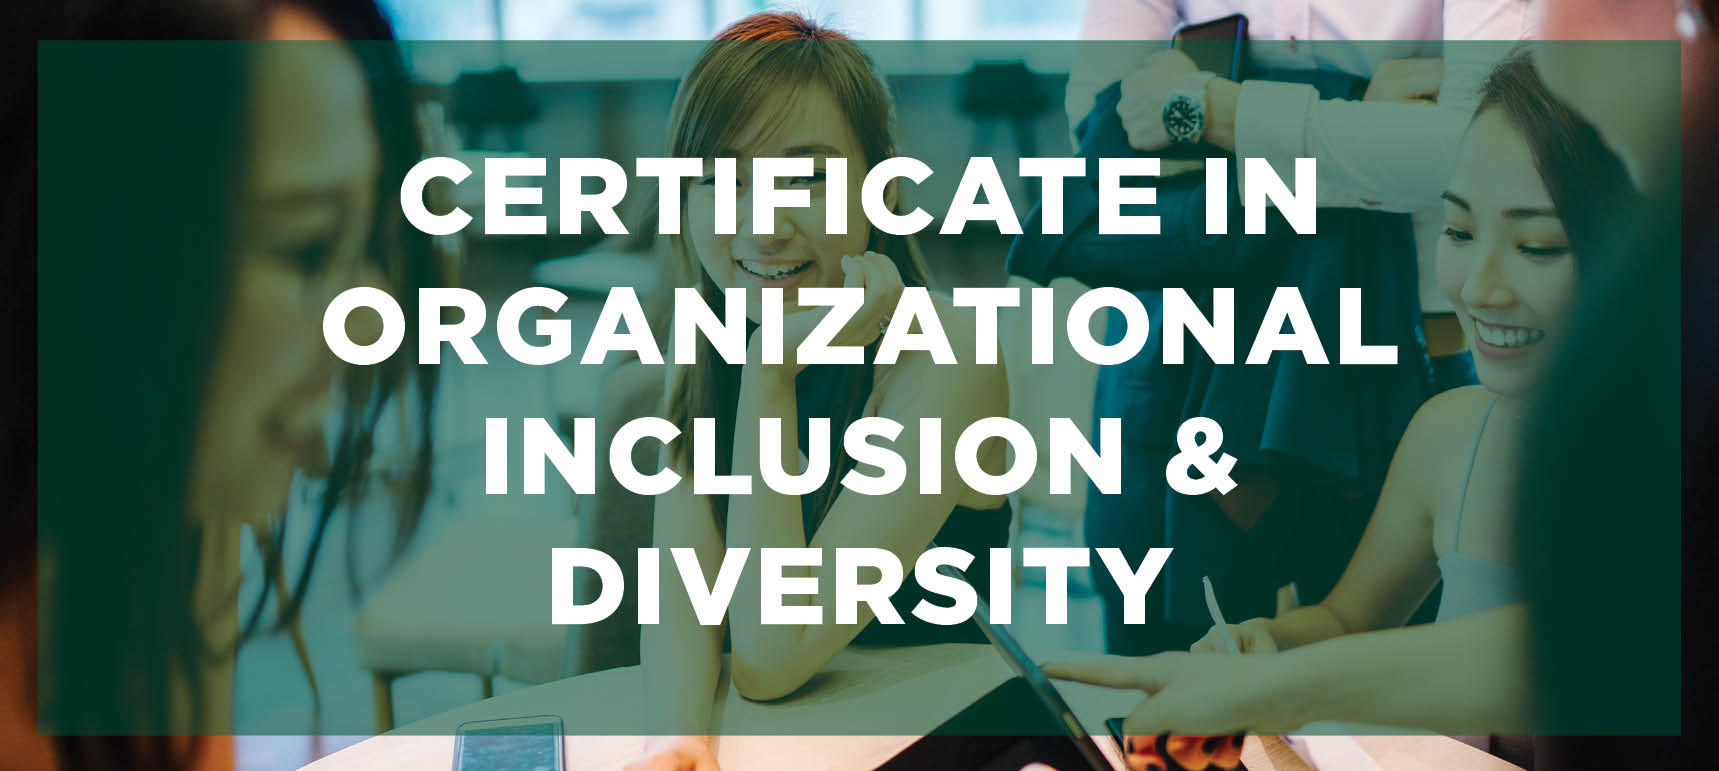 Certificate in Organizational Inclusion & Diversity